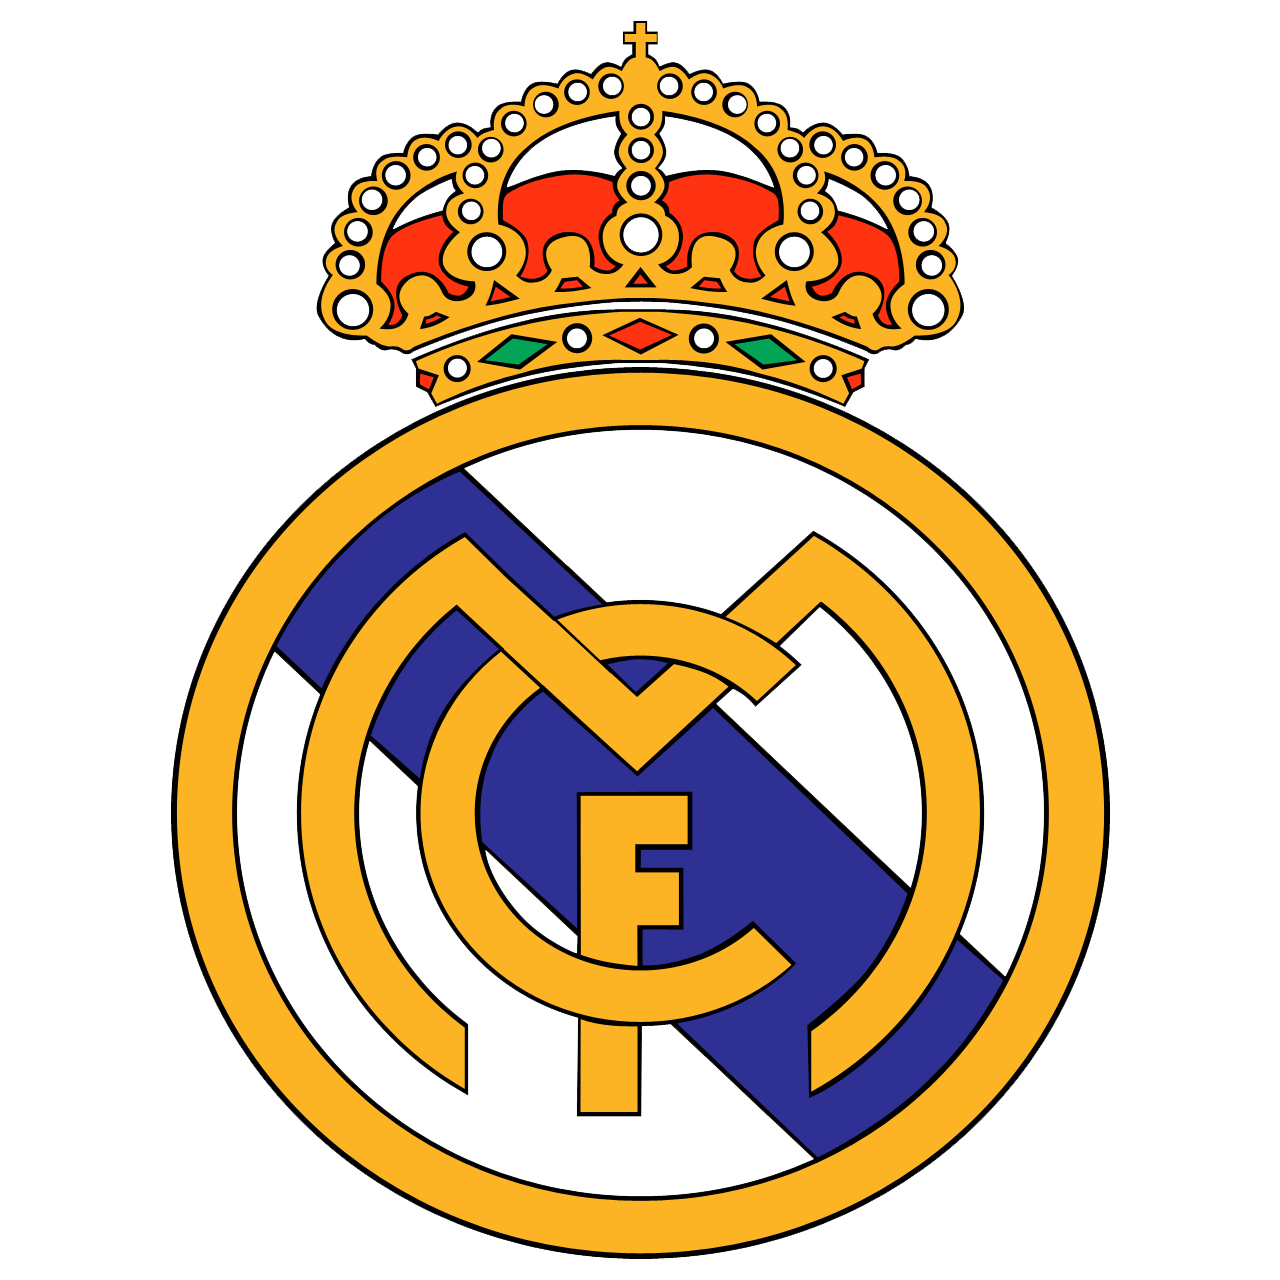 real_madrid_logo.png